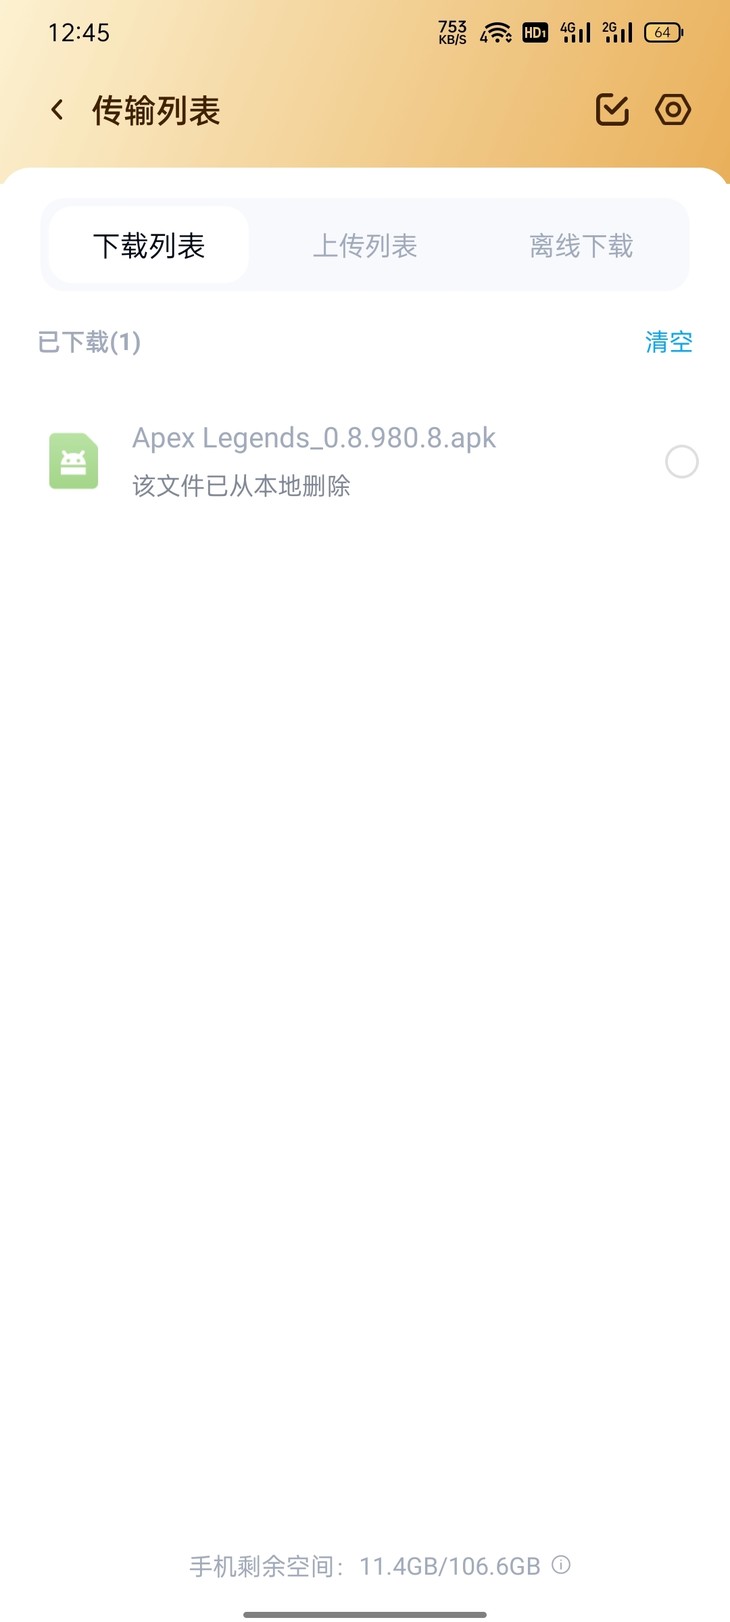 APEX简体中文翻译！最新！